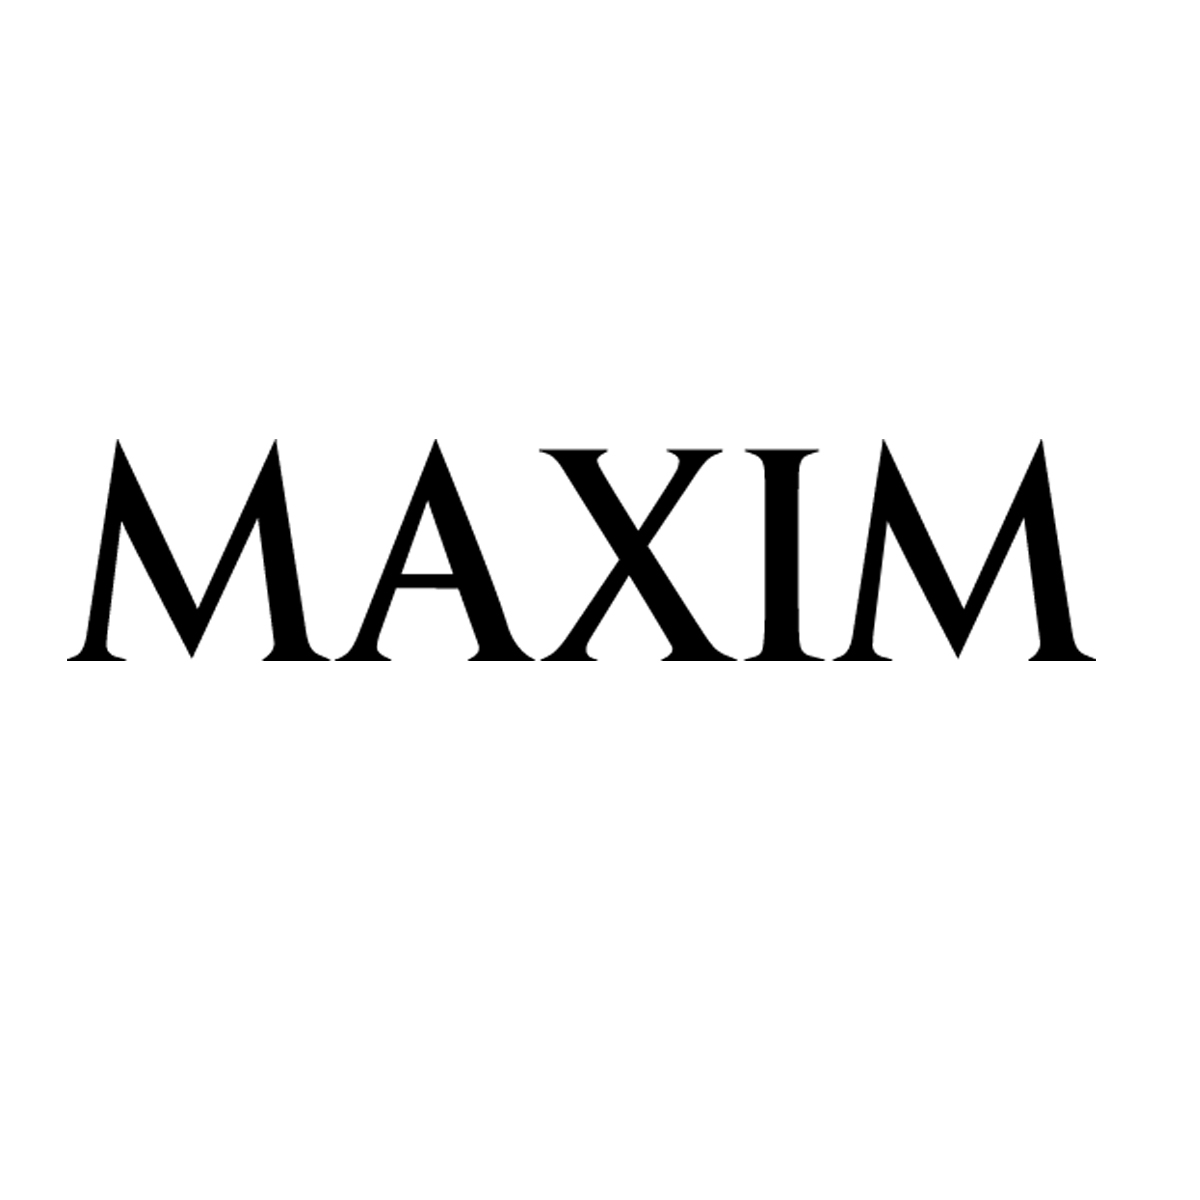 MAXIM magazine logo.jpg